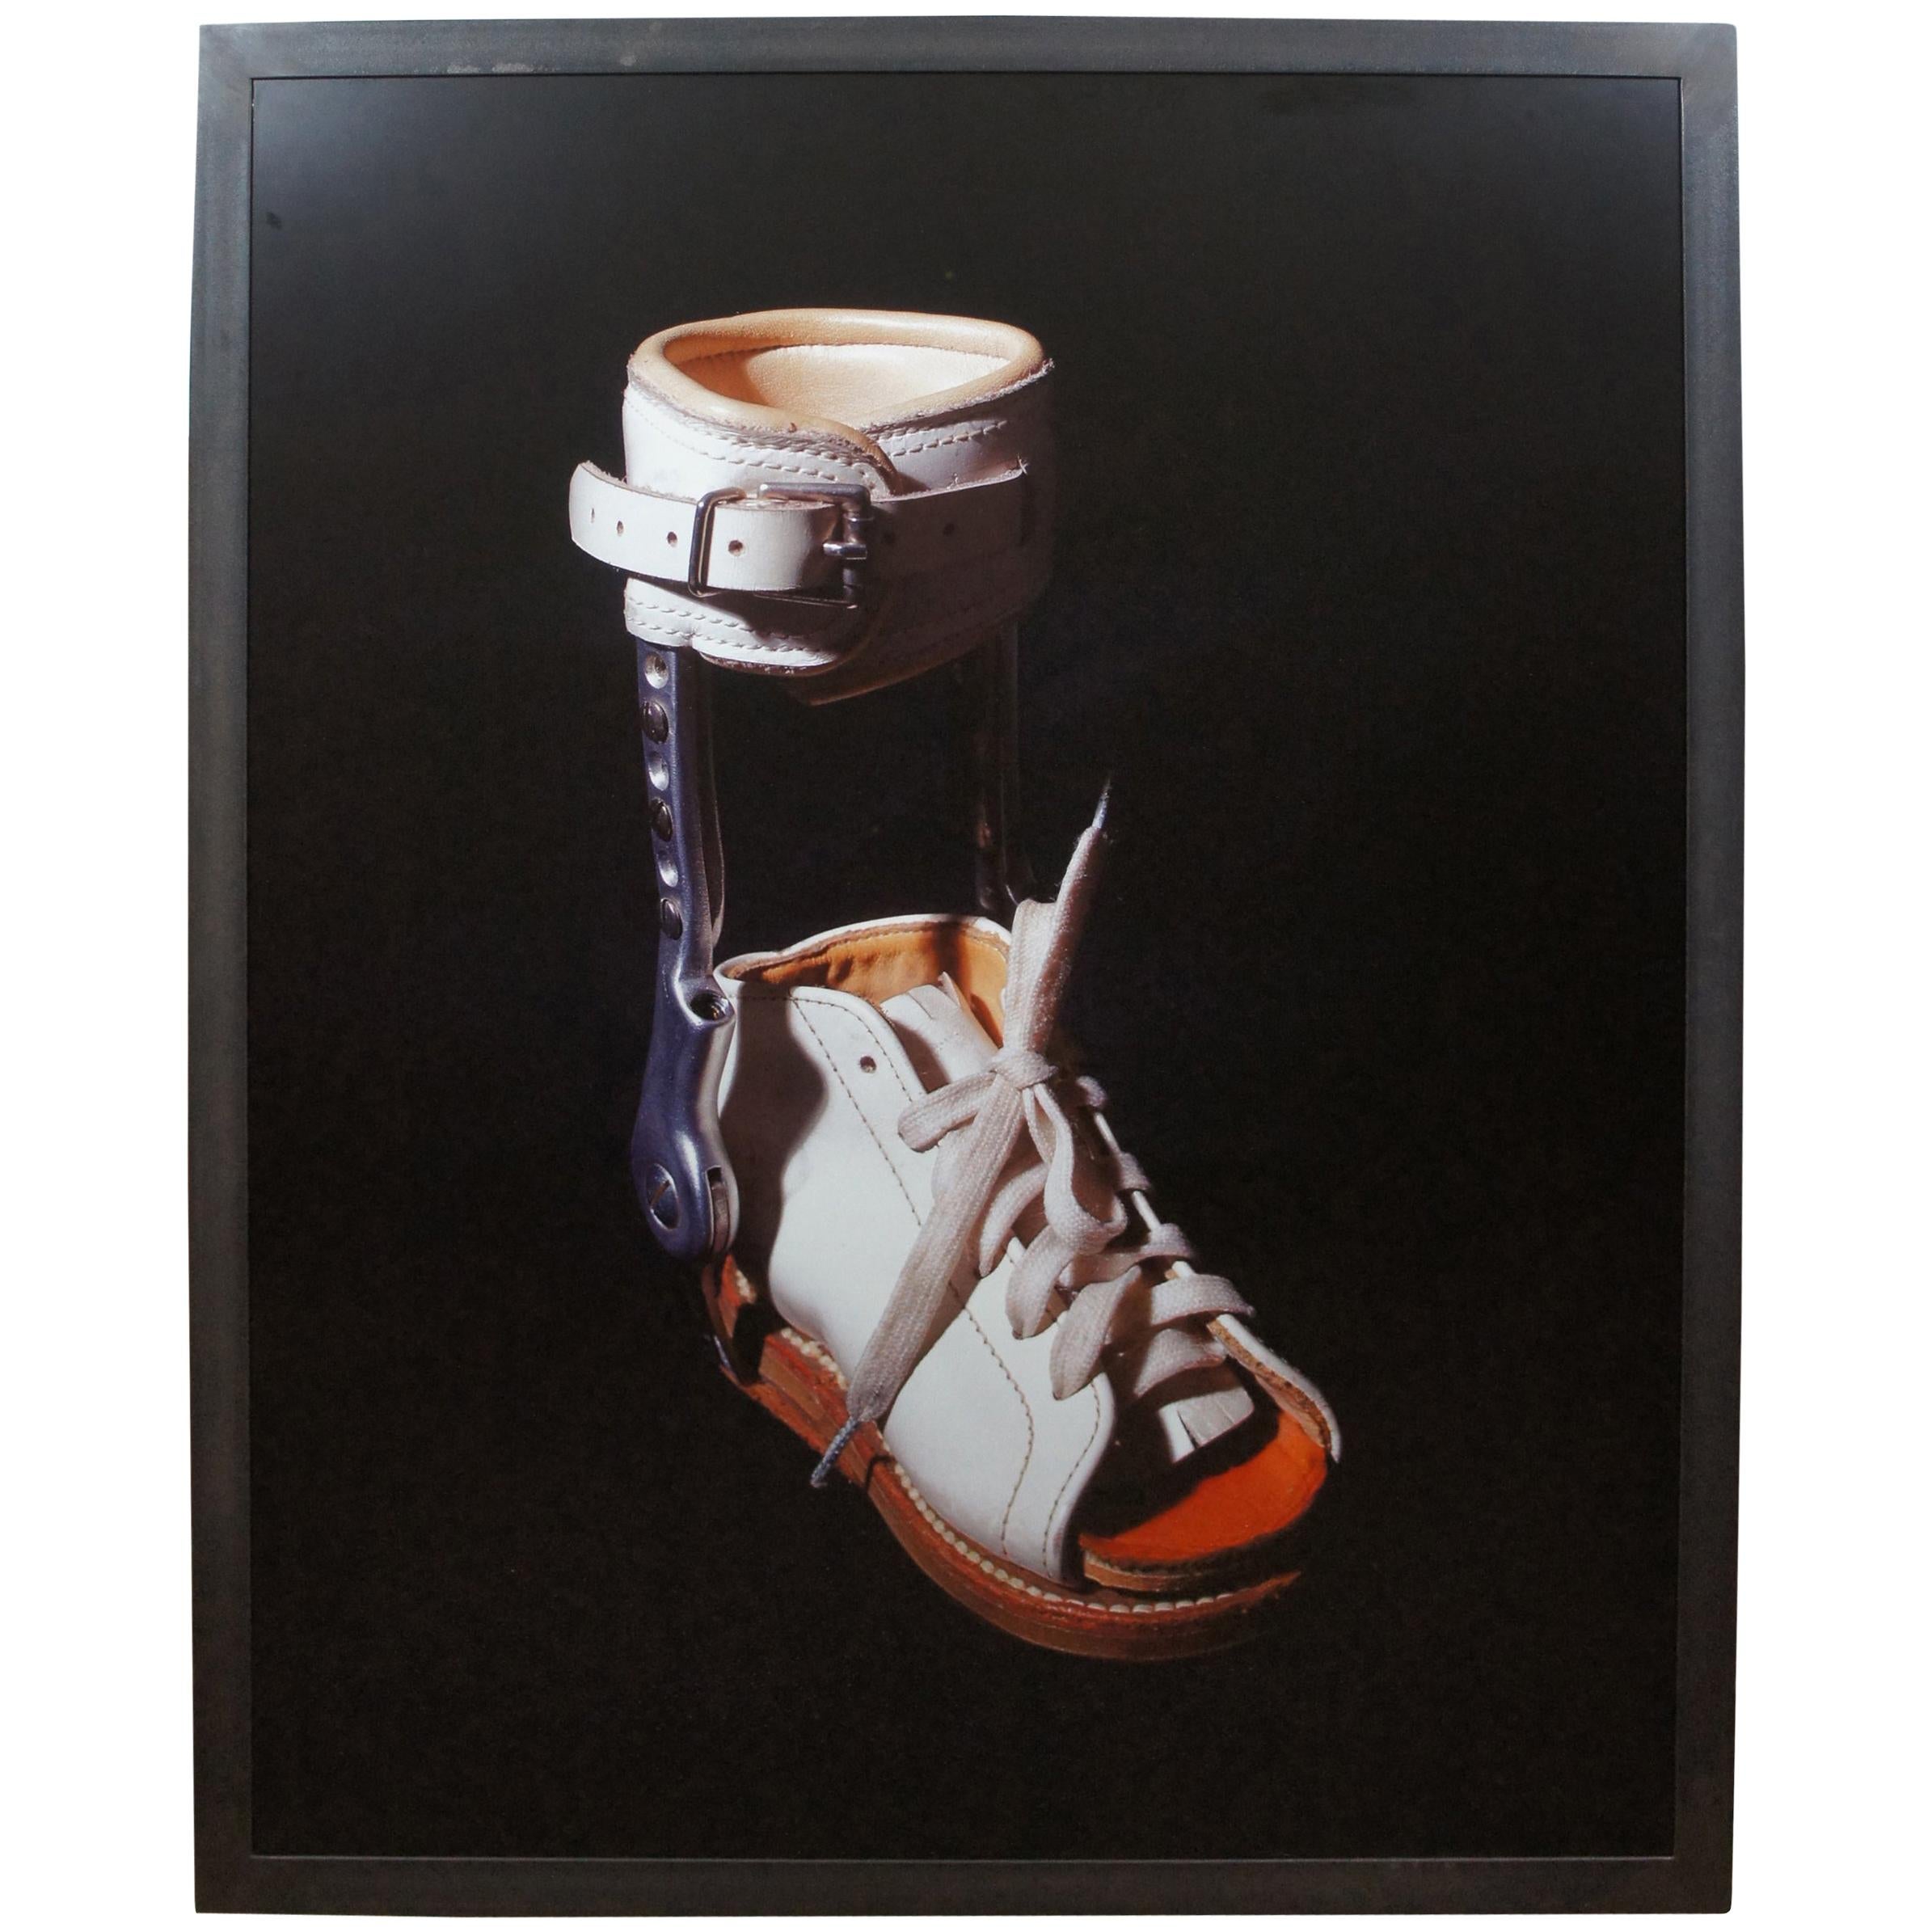 1993 Janet Biggs "One" Cibachrome Photograph Leg Brace